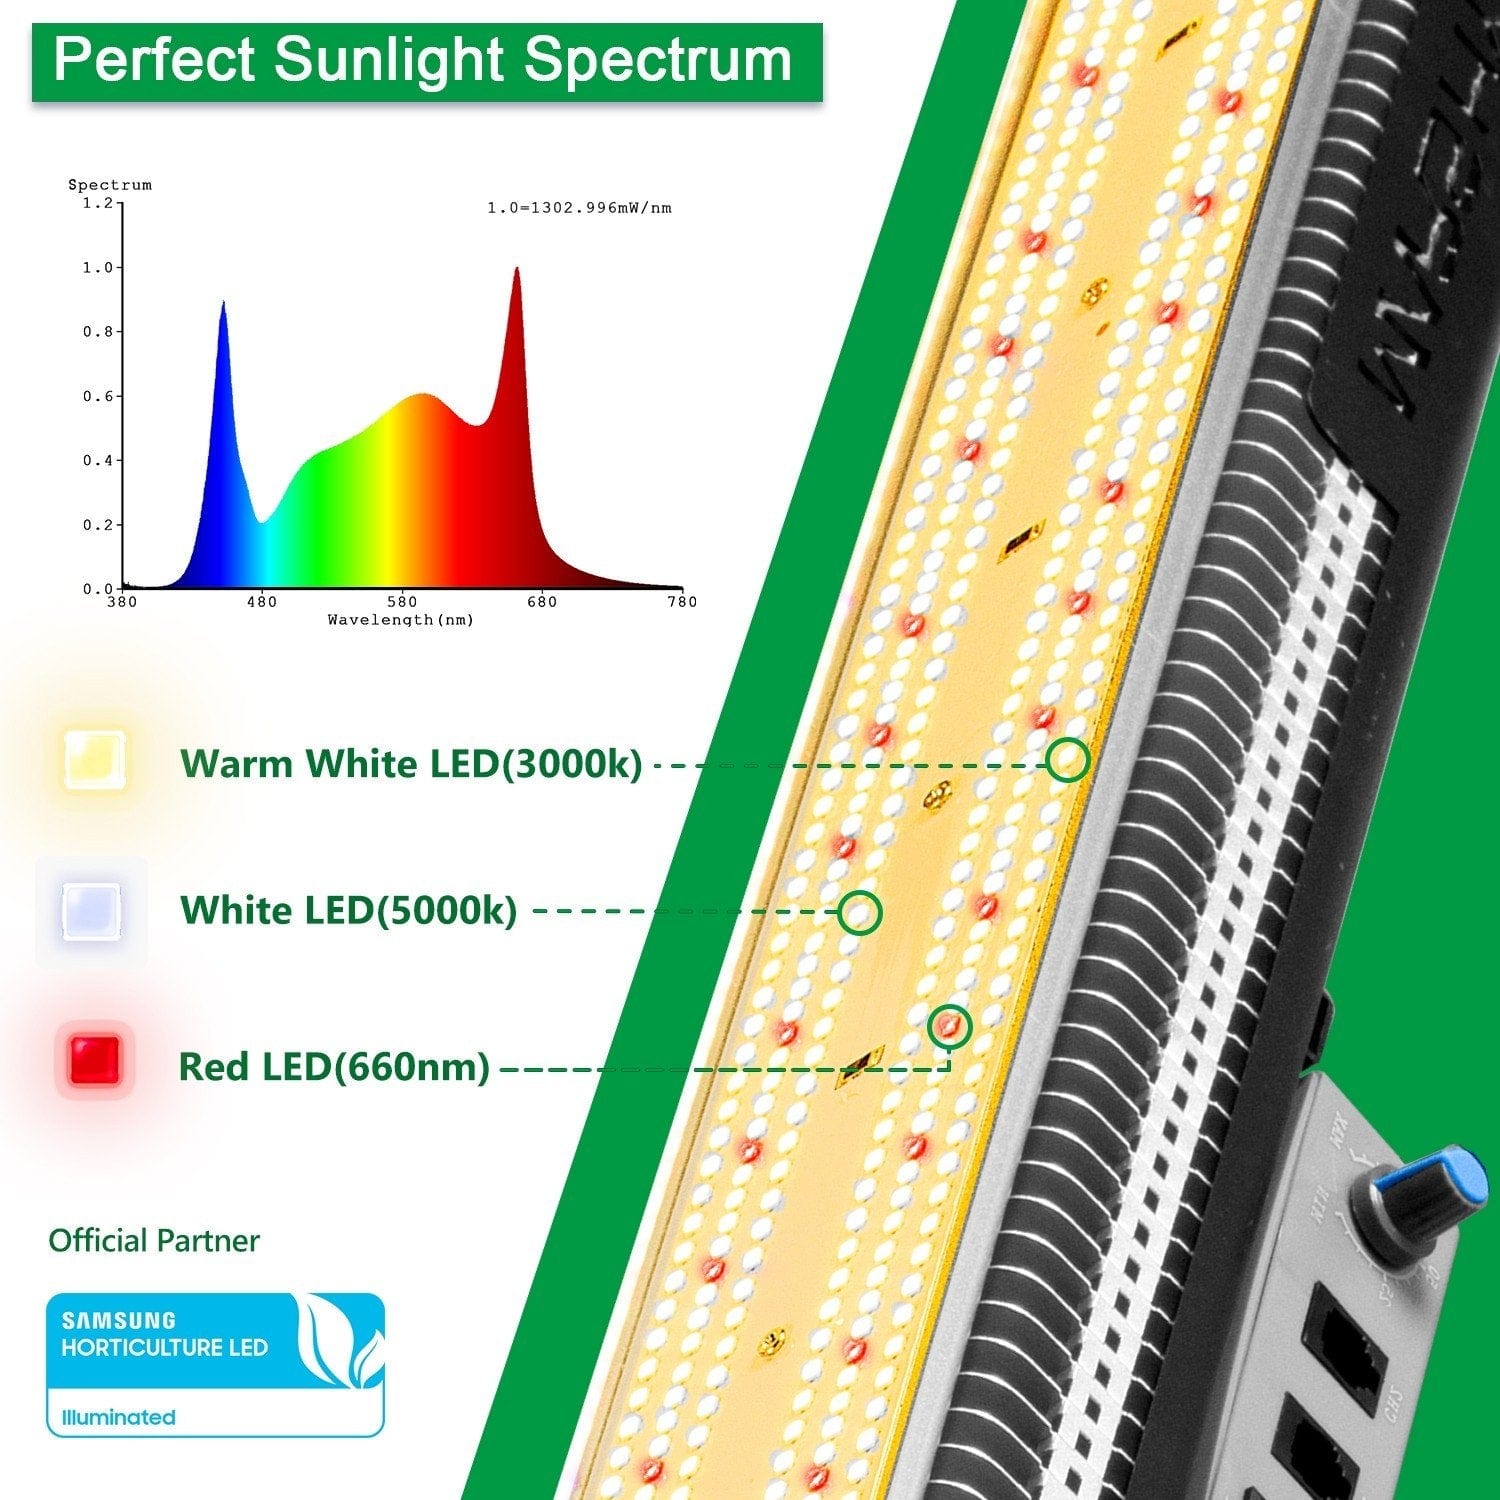 AC Infinity 240W IONBOARD S33 Full Spectrum LED Grow Light